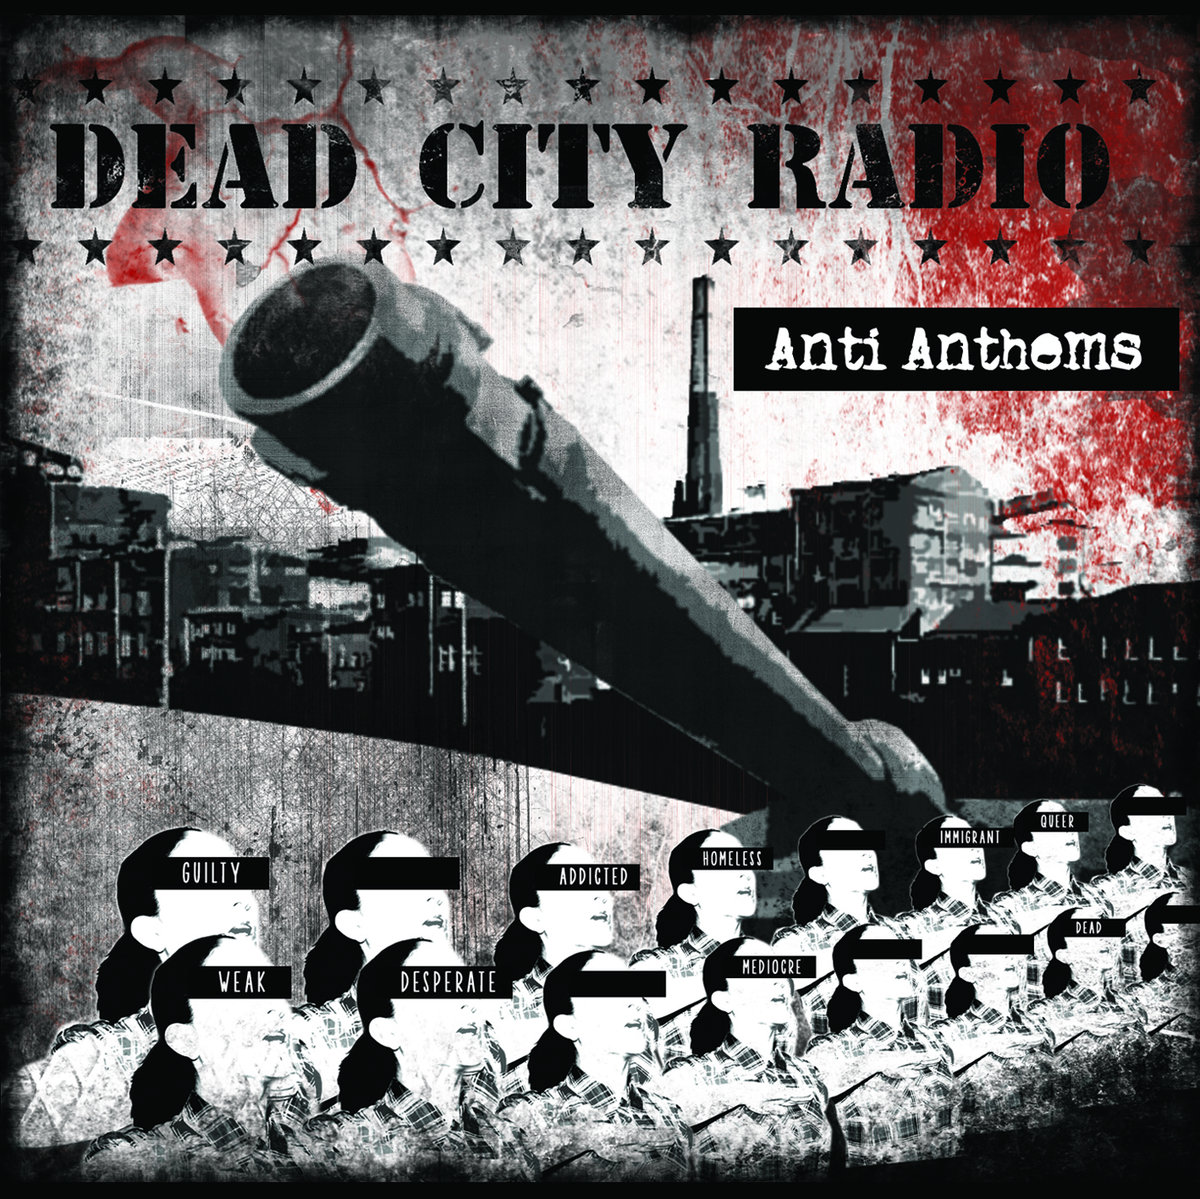 DEAD CITY RADIO "Anti anthems" - 33T